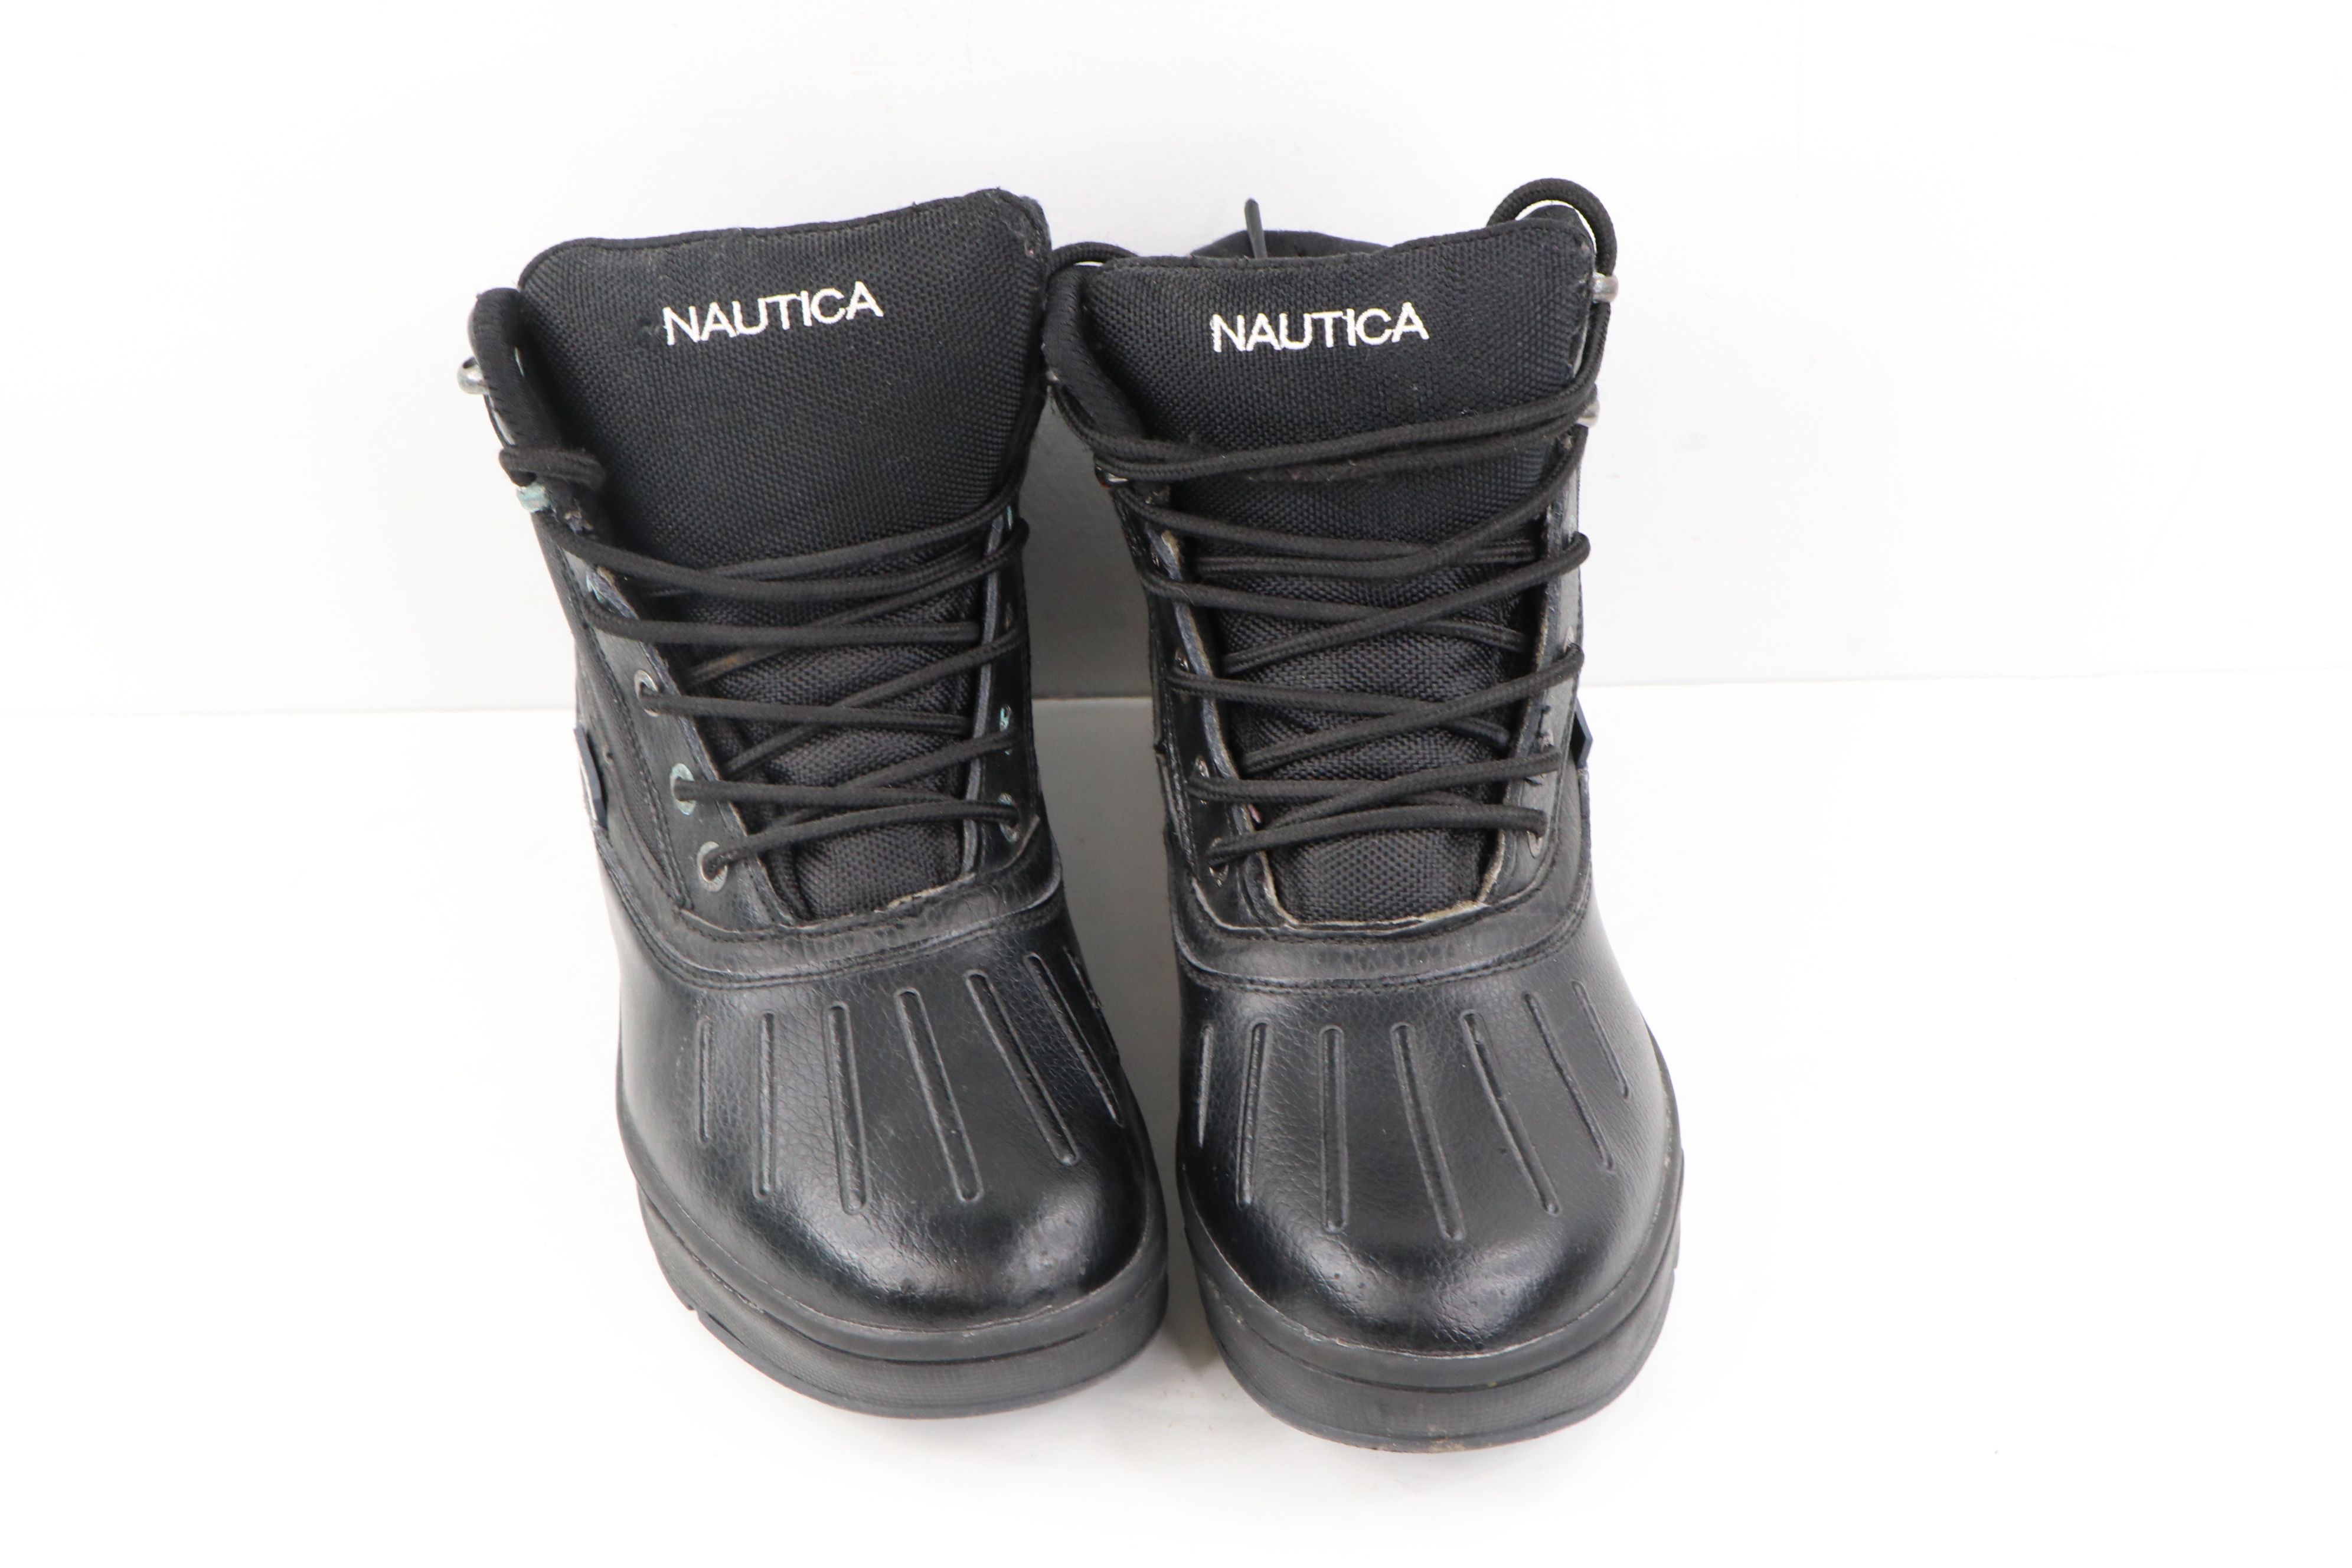 Vintage Vintage Nautica Waterproof Winter Snow Duck Boots Black Size US 7 / EU 40 - 3 Thumbnail